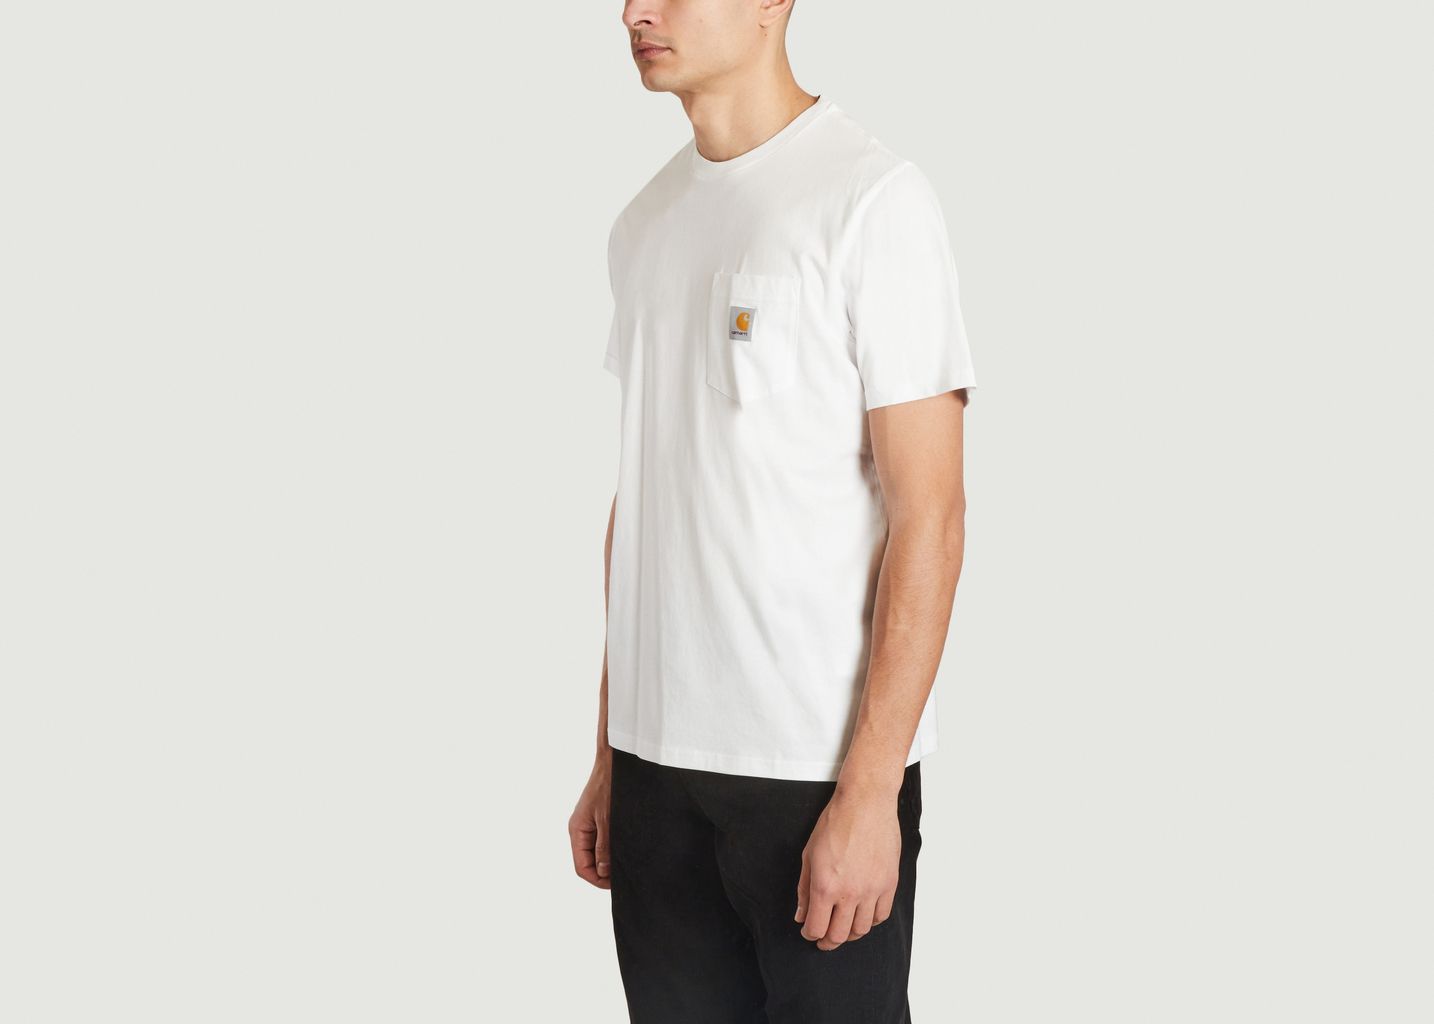 Tshirt Pocket - Carhartt WIP